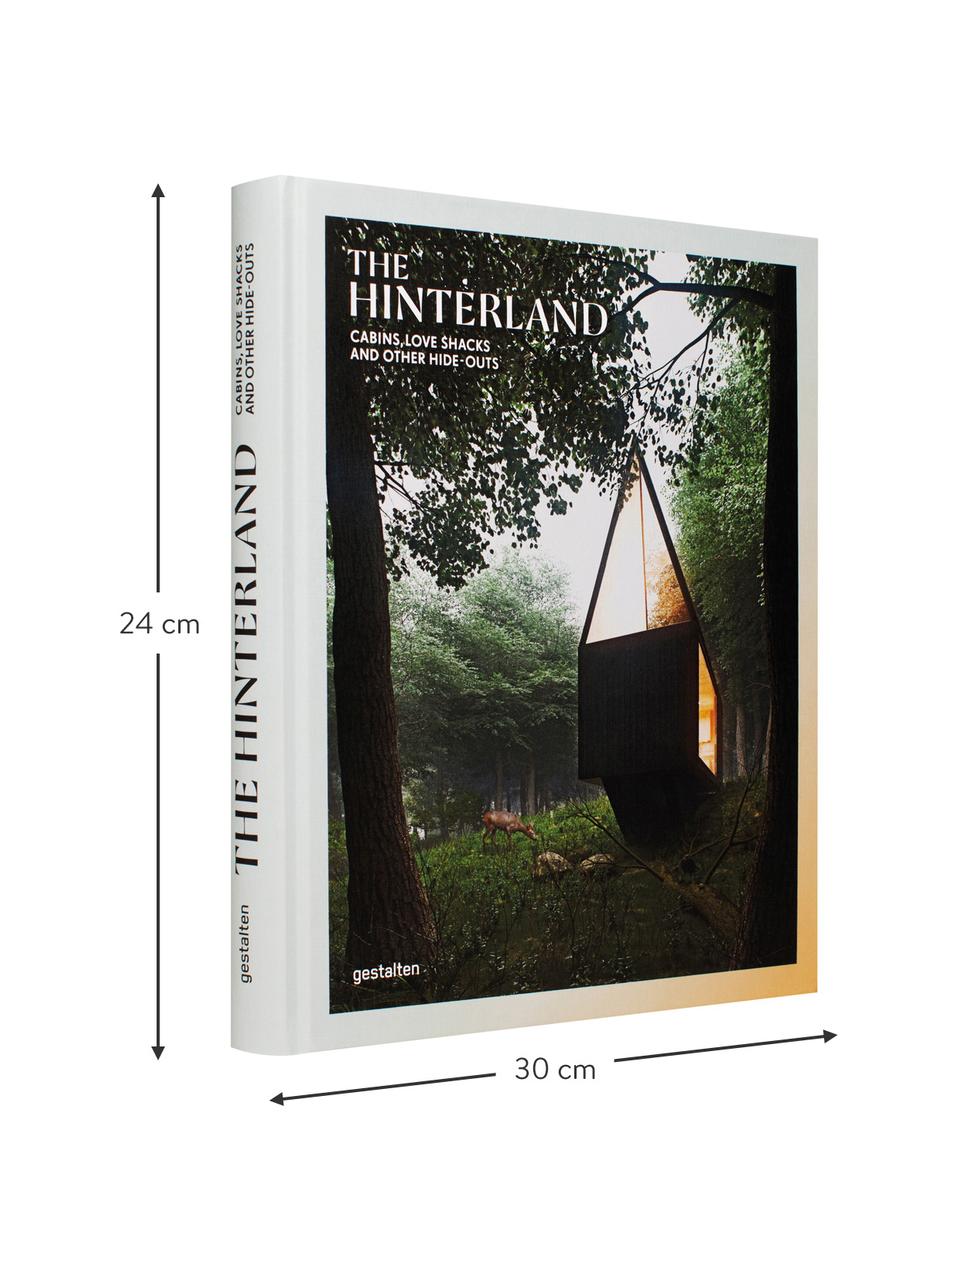 Geïllustreerd boek The Hinterland, Papier, hardcover, Multicolour, B 24 x L 30 cm